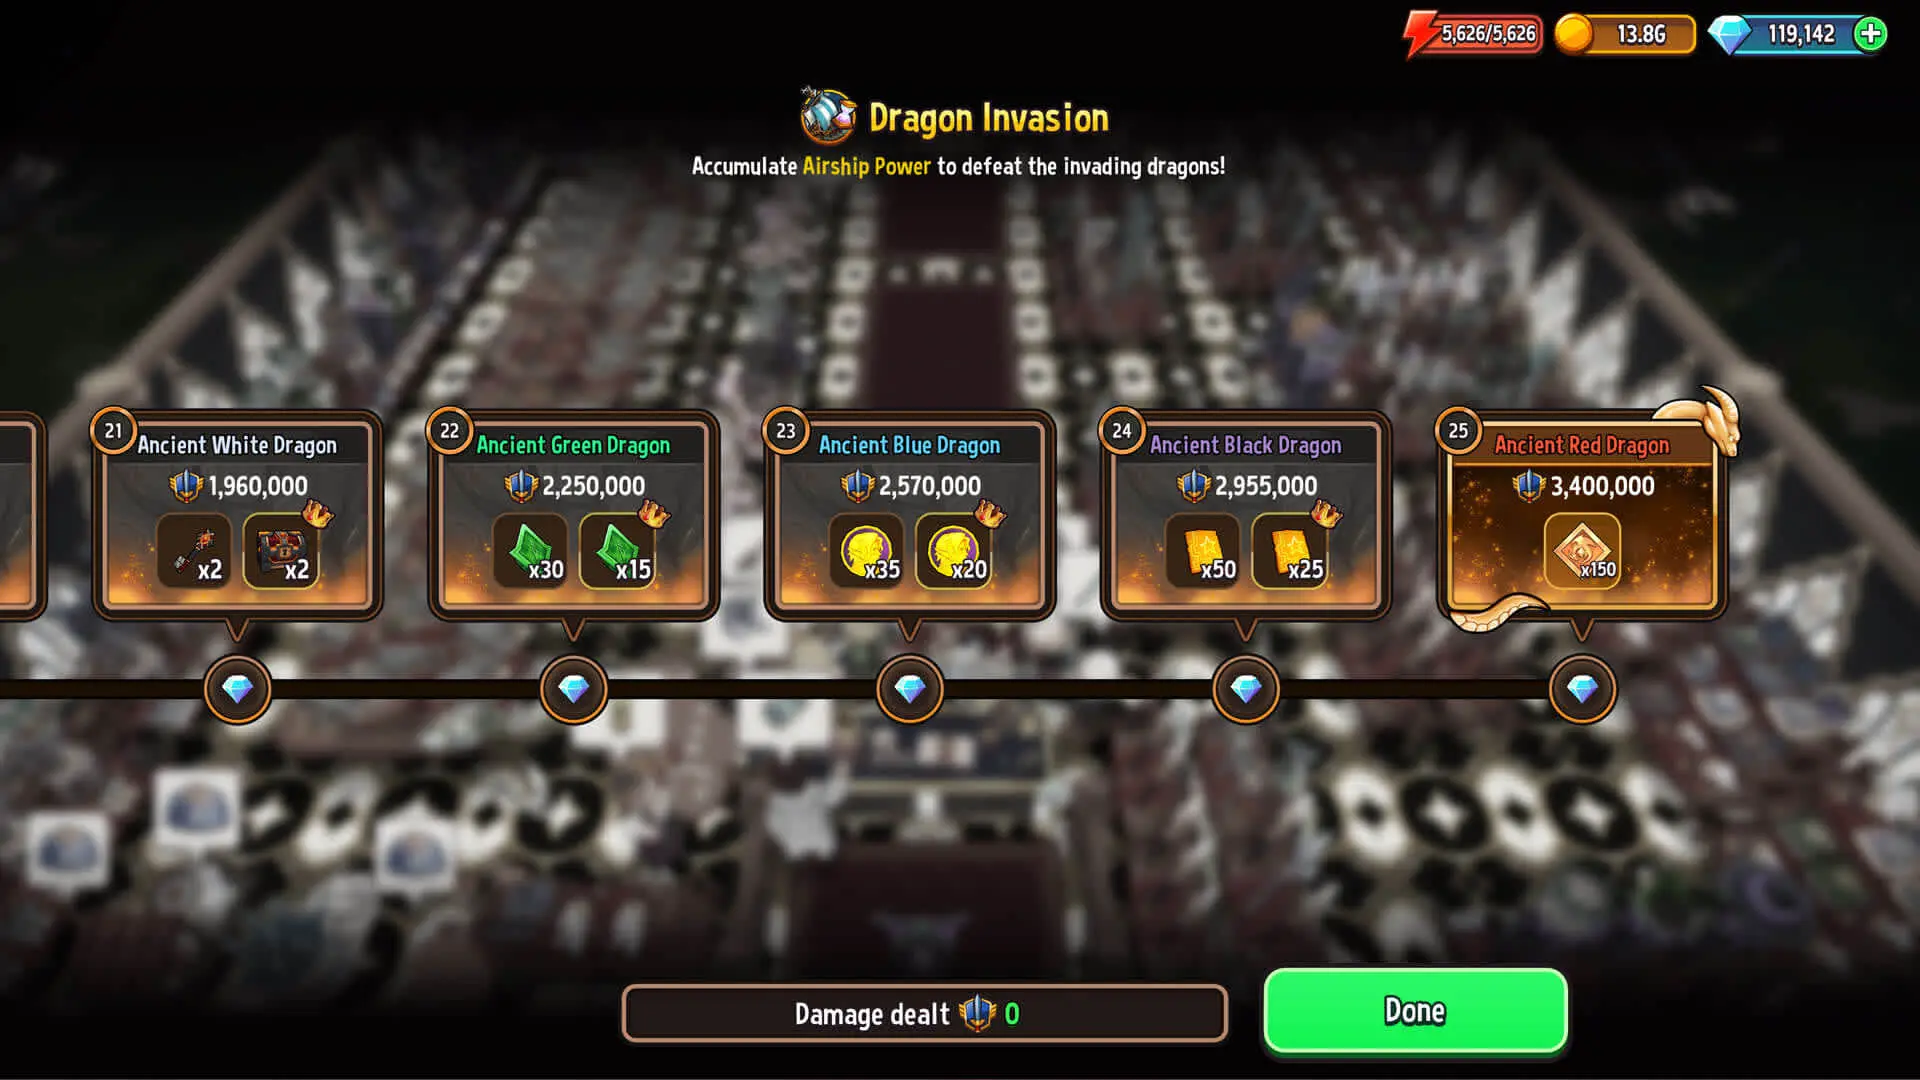 Changes to the Dragon Invasion reward track (last three bonus reward milestones hidden).